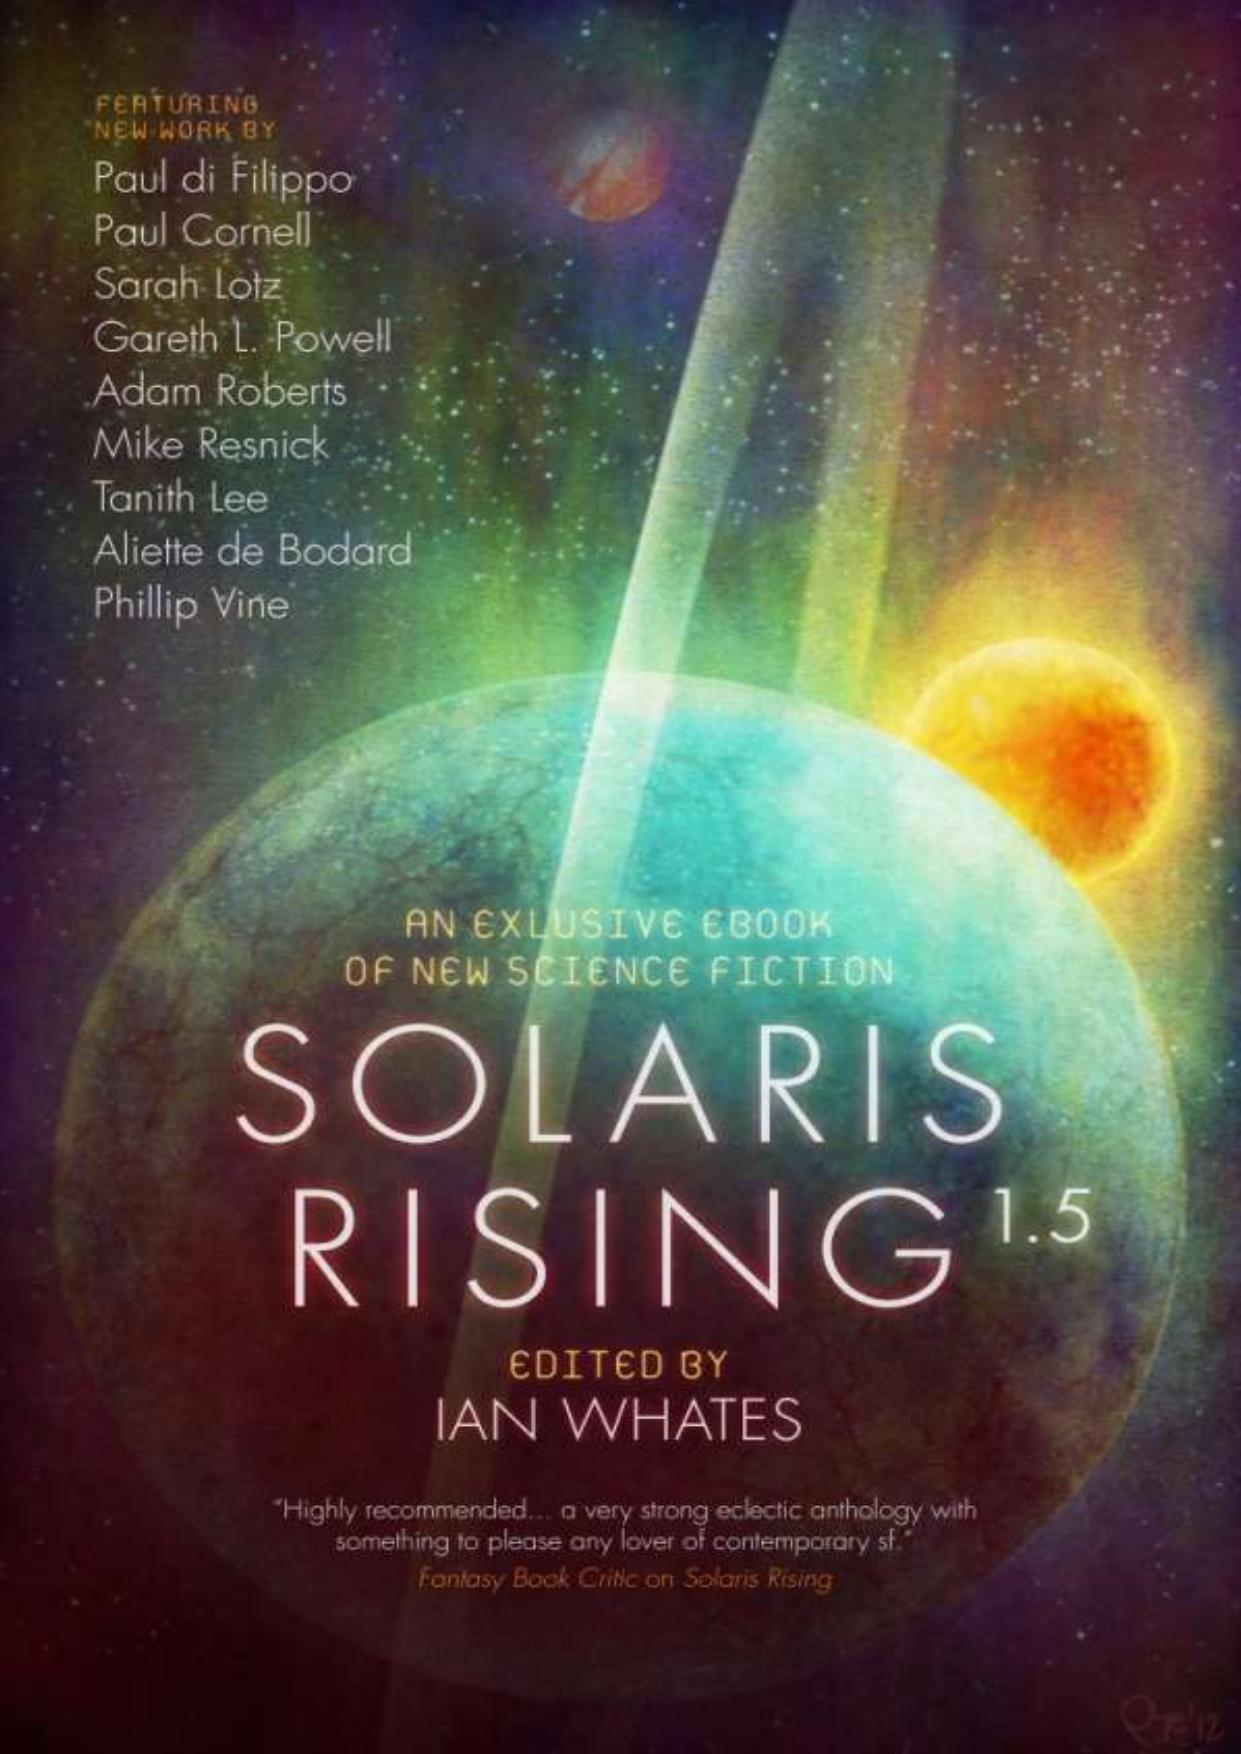 Solaris Rising 1.5 by Ian Whates